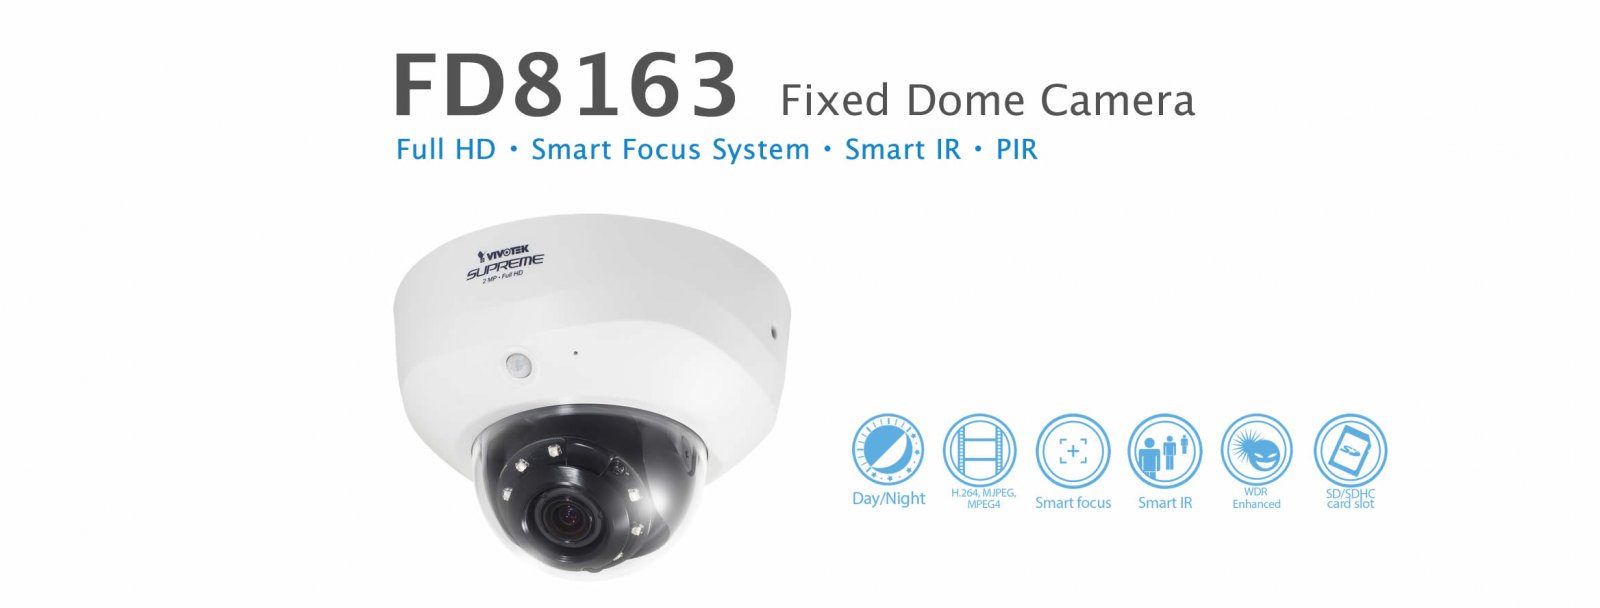 FD8163. Vivotek Fixed Dome Camera